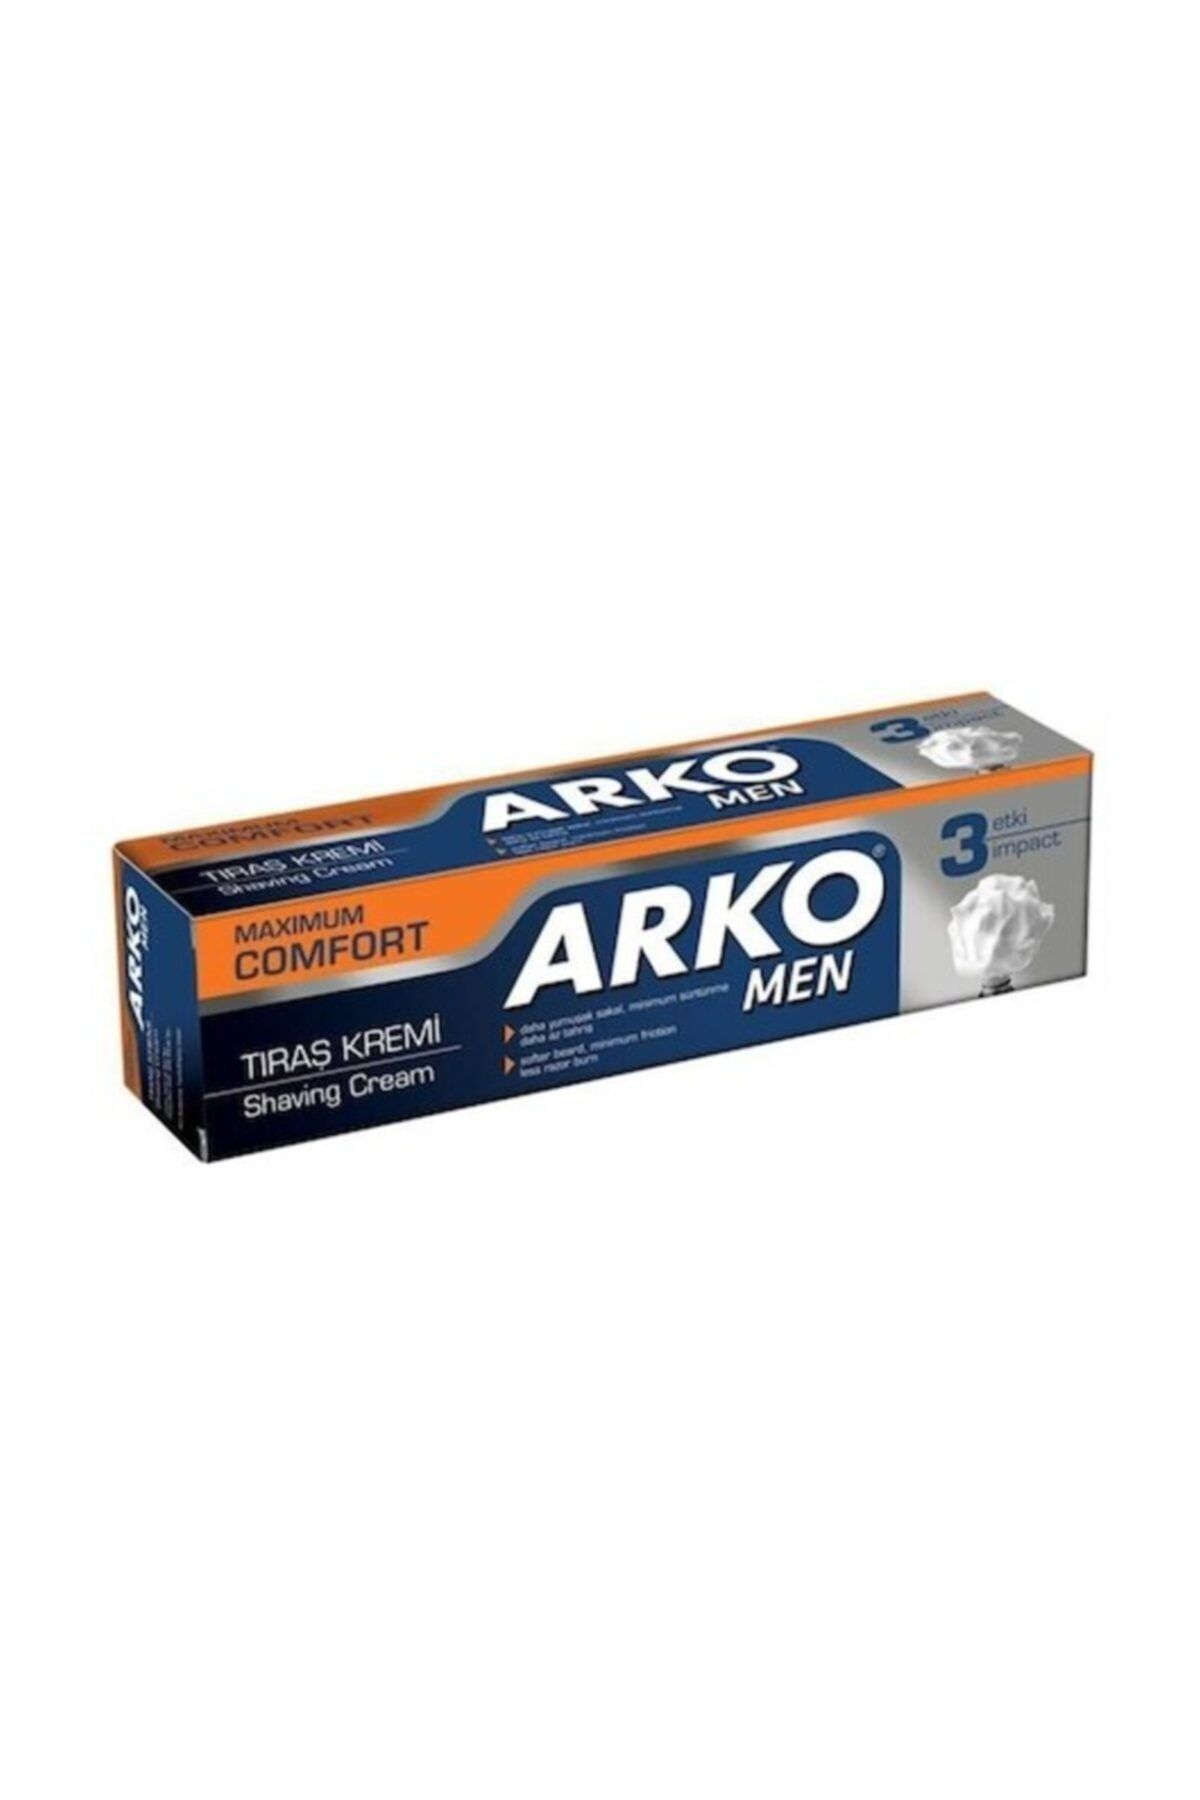 Arko Men Tıraş Kremi Maximum Comfort 100 gr